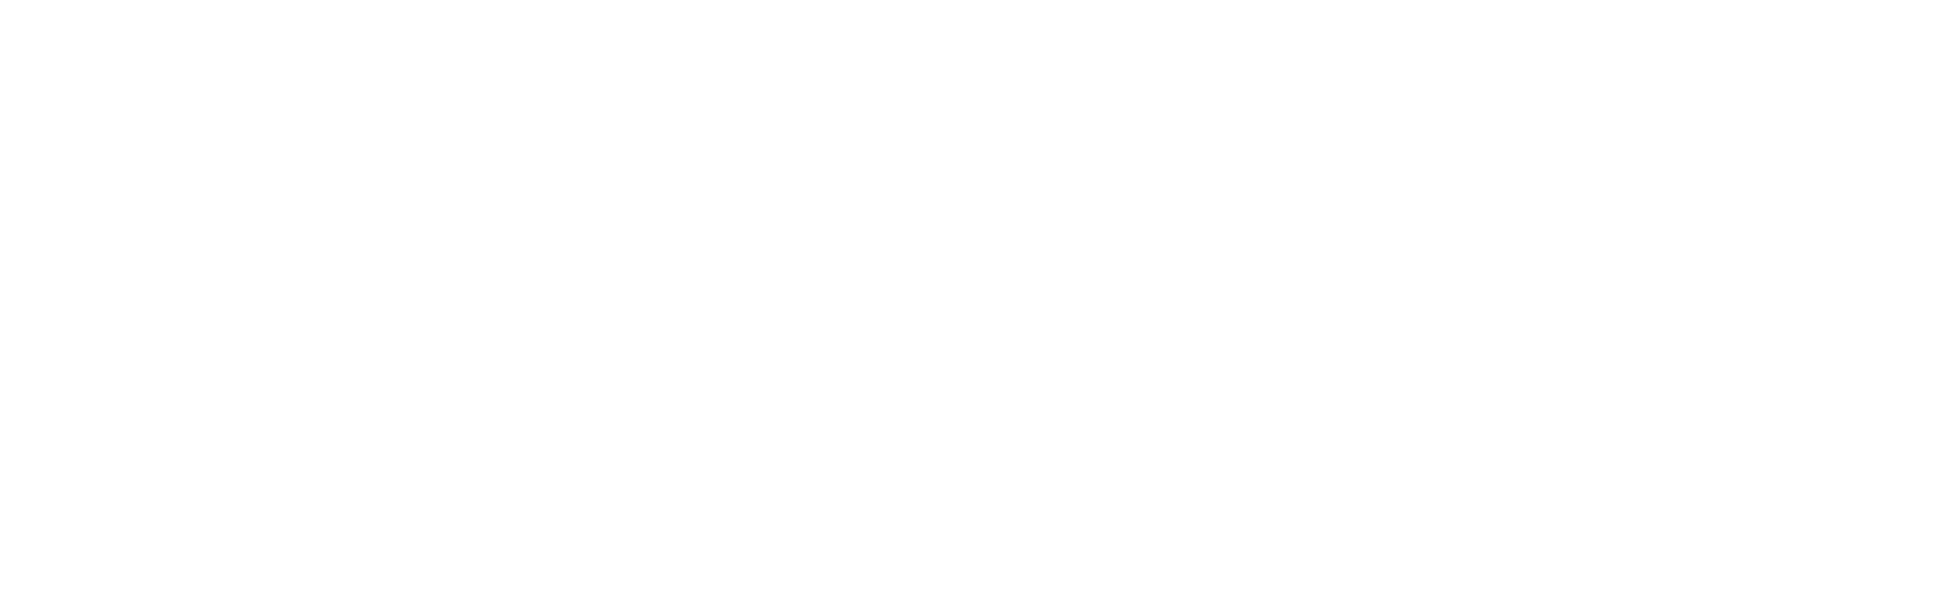 Utmost Logo